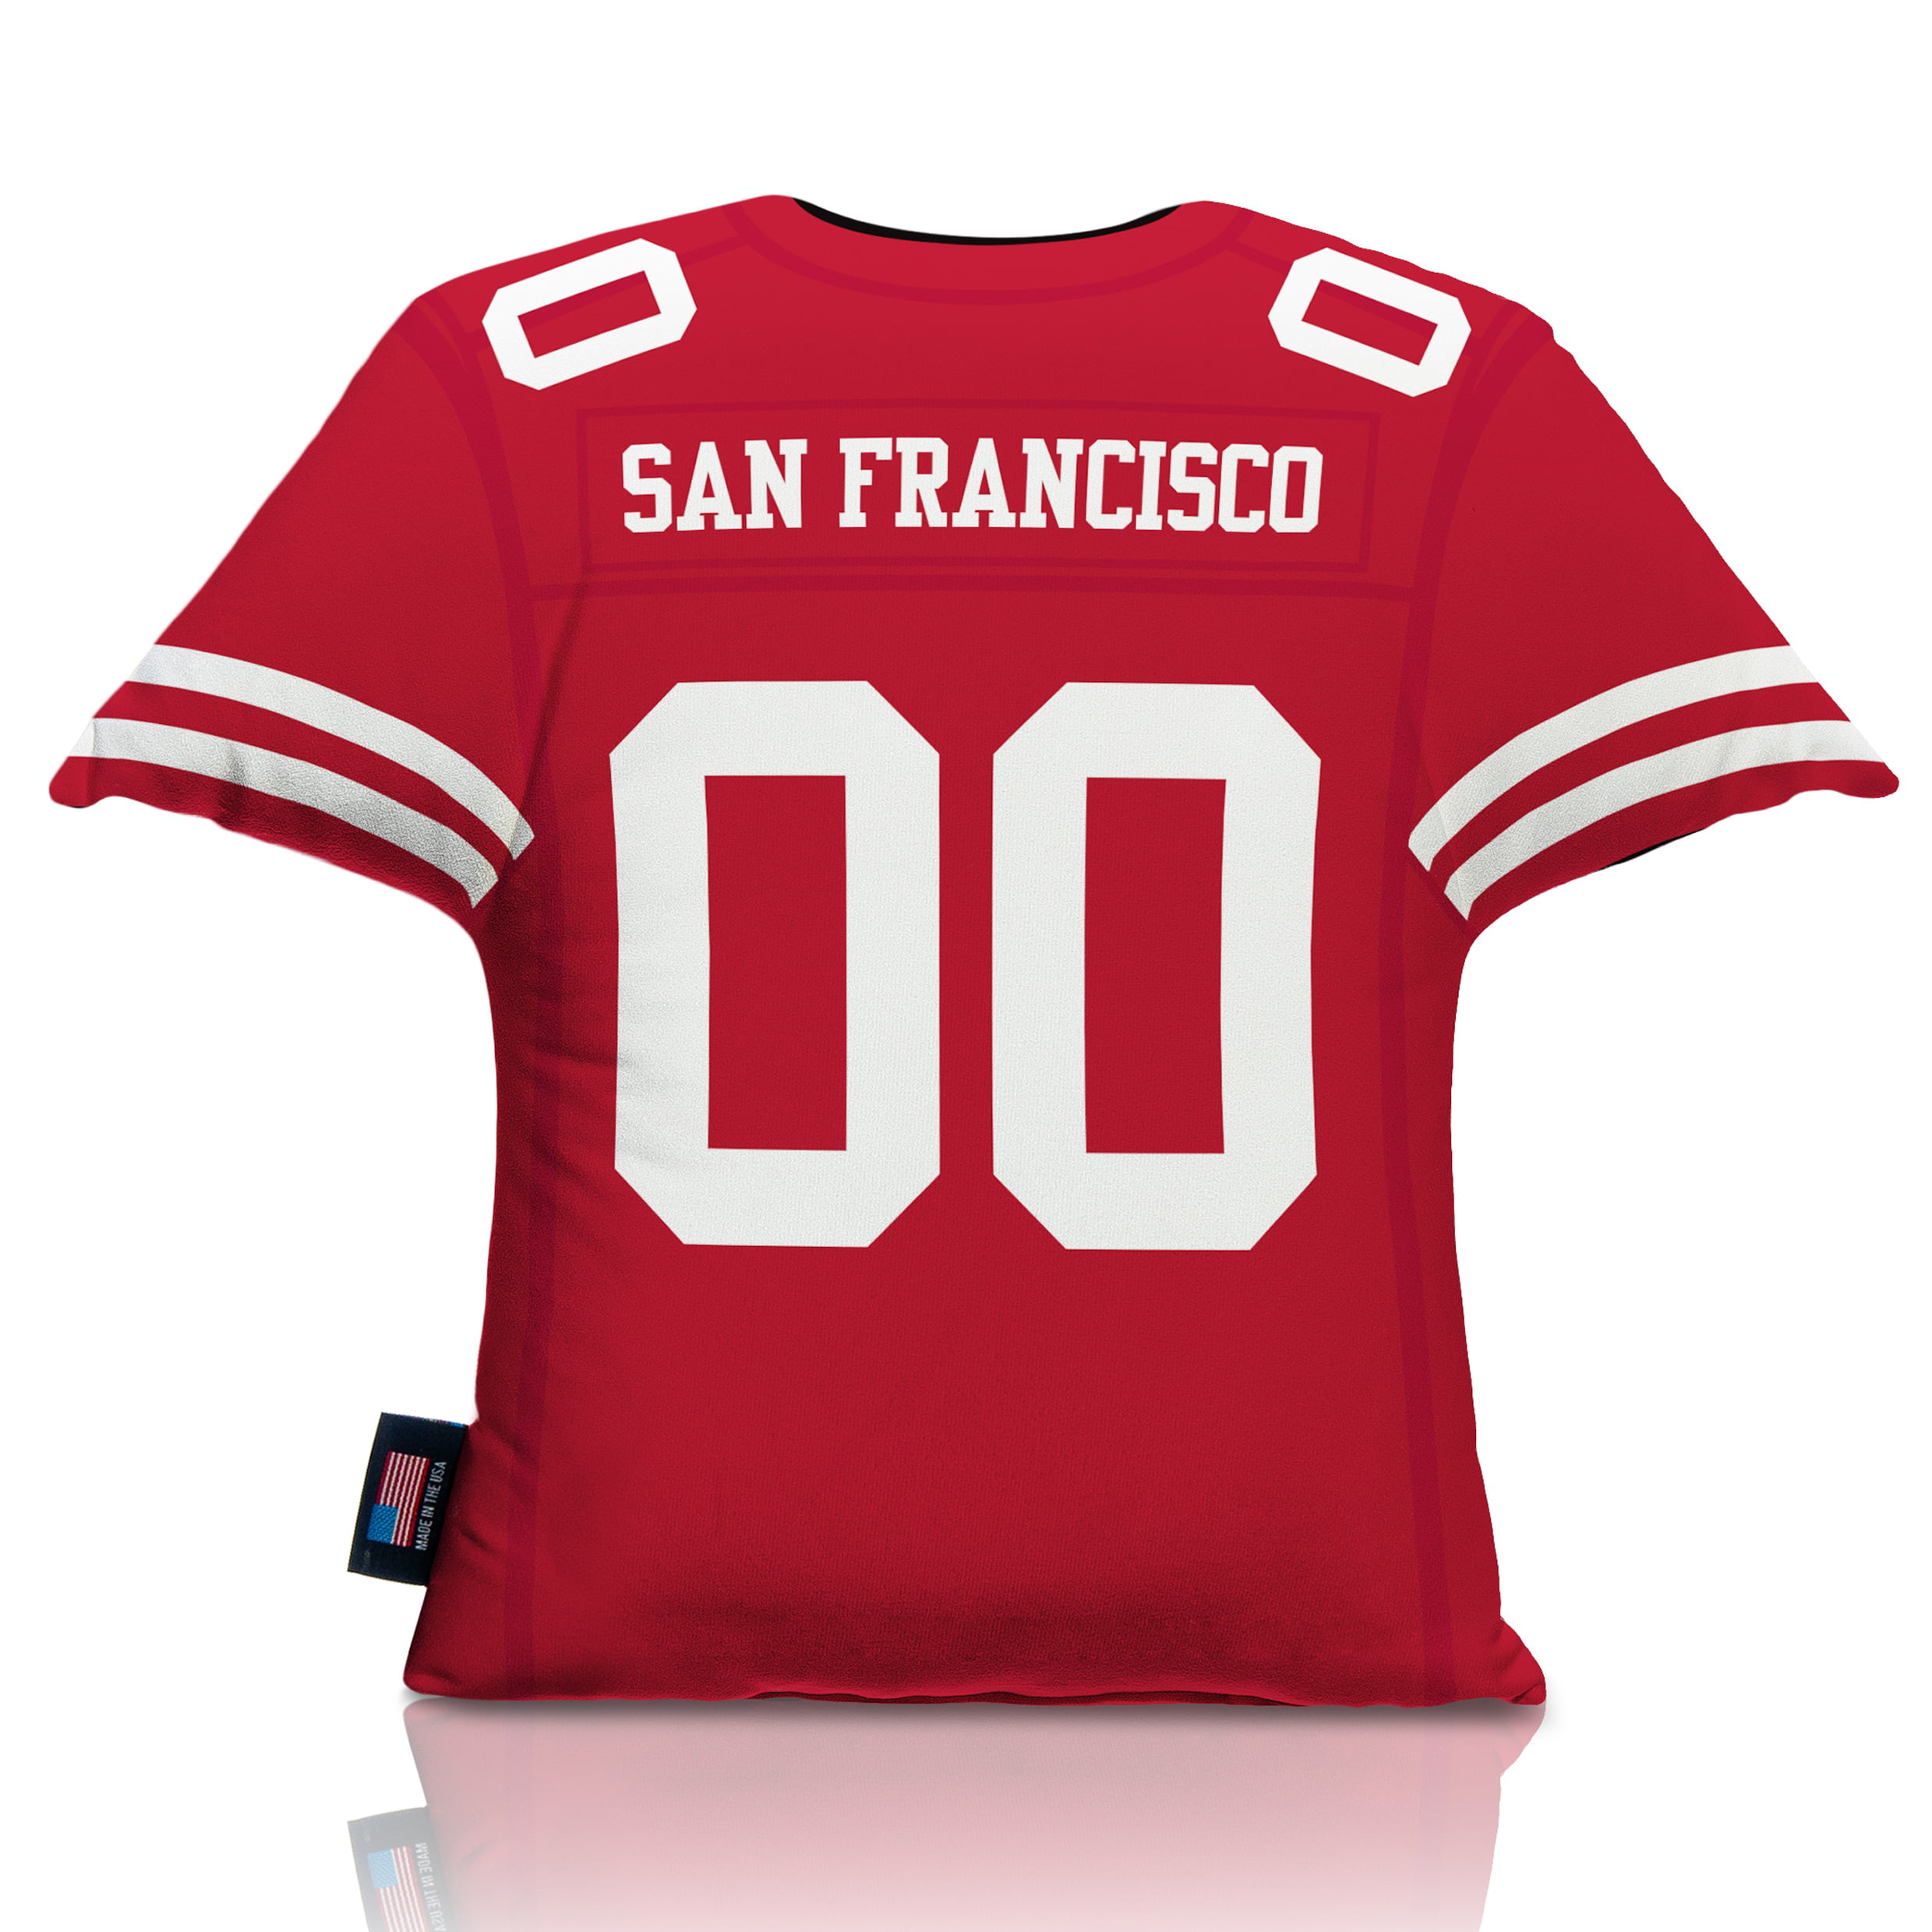 San Francisco 49ers 16'' x 16'' Jersey Pillow - Red